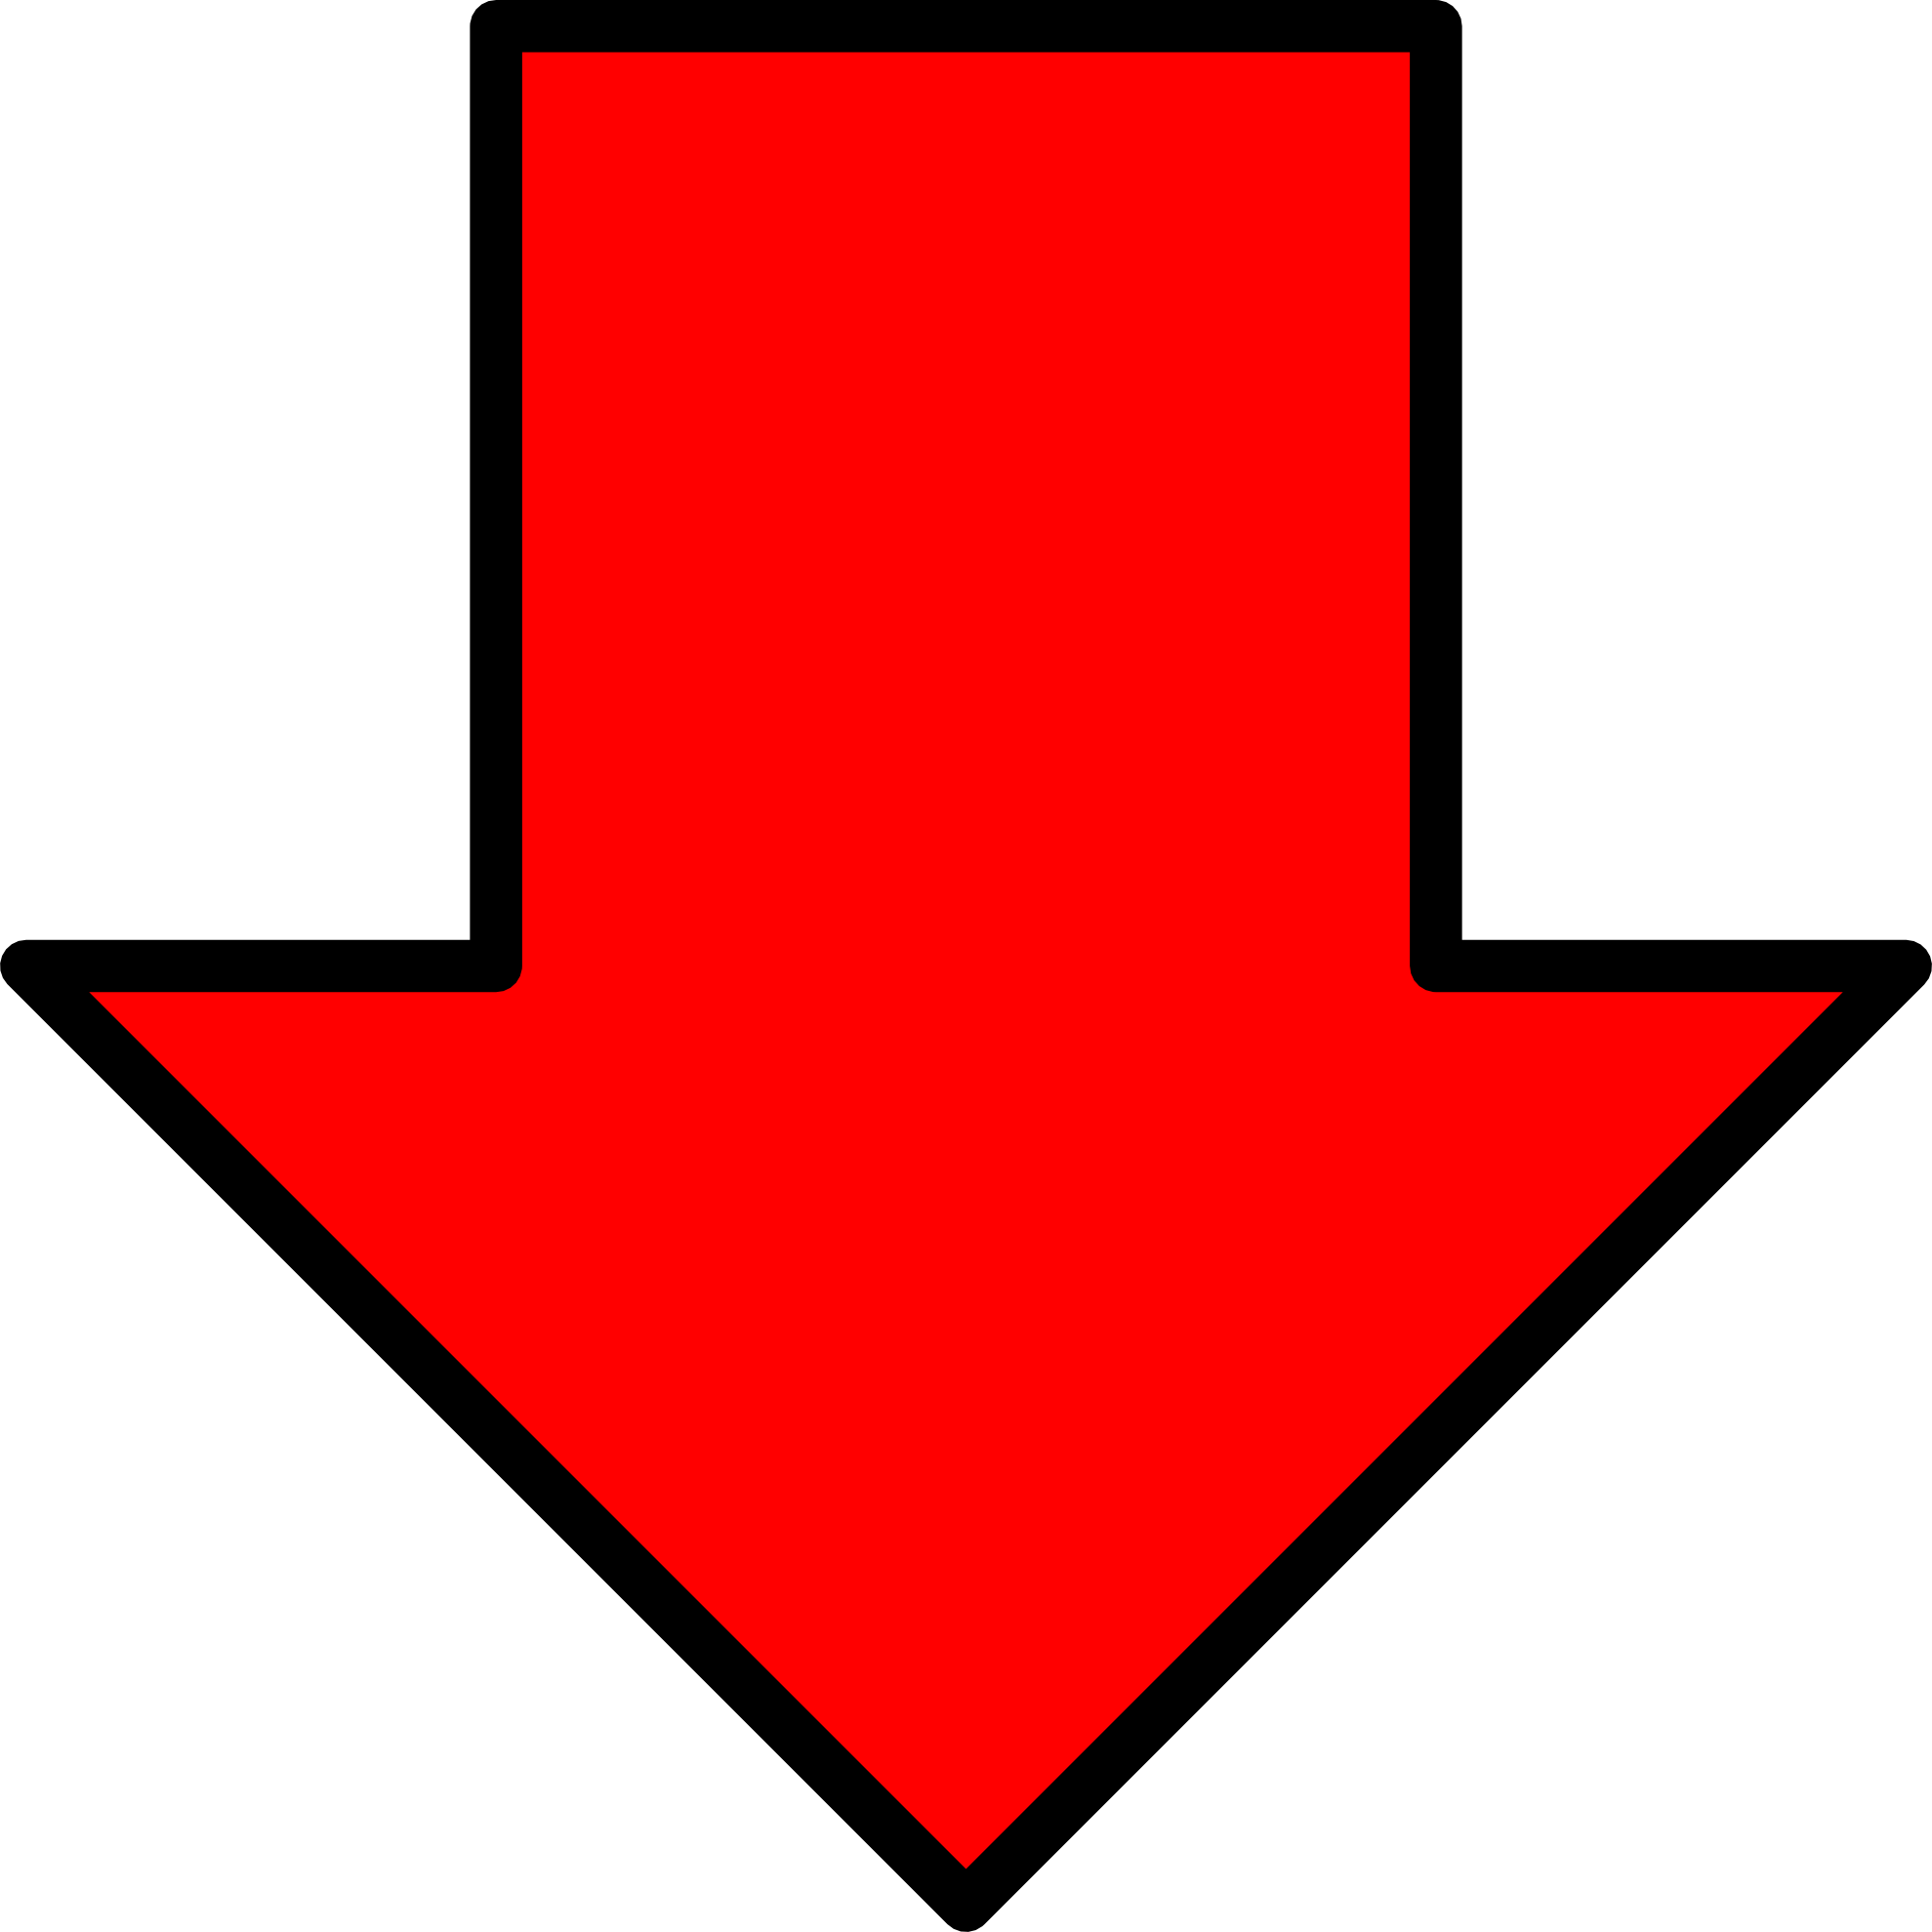 Arrow Down - Red Arrow Pointing Down (1979x1979)